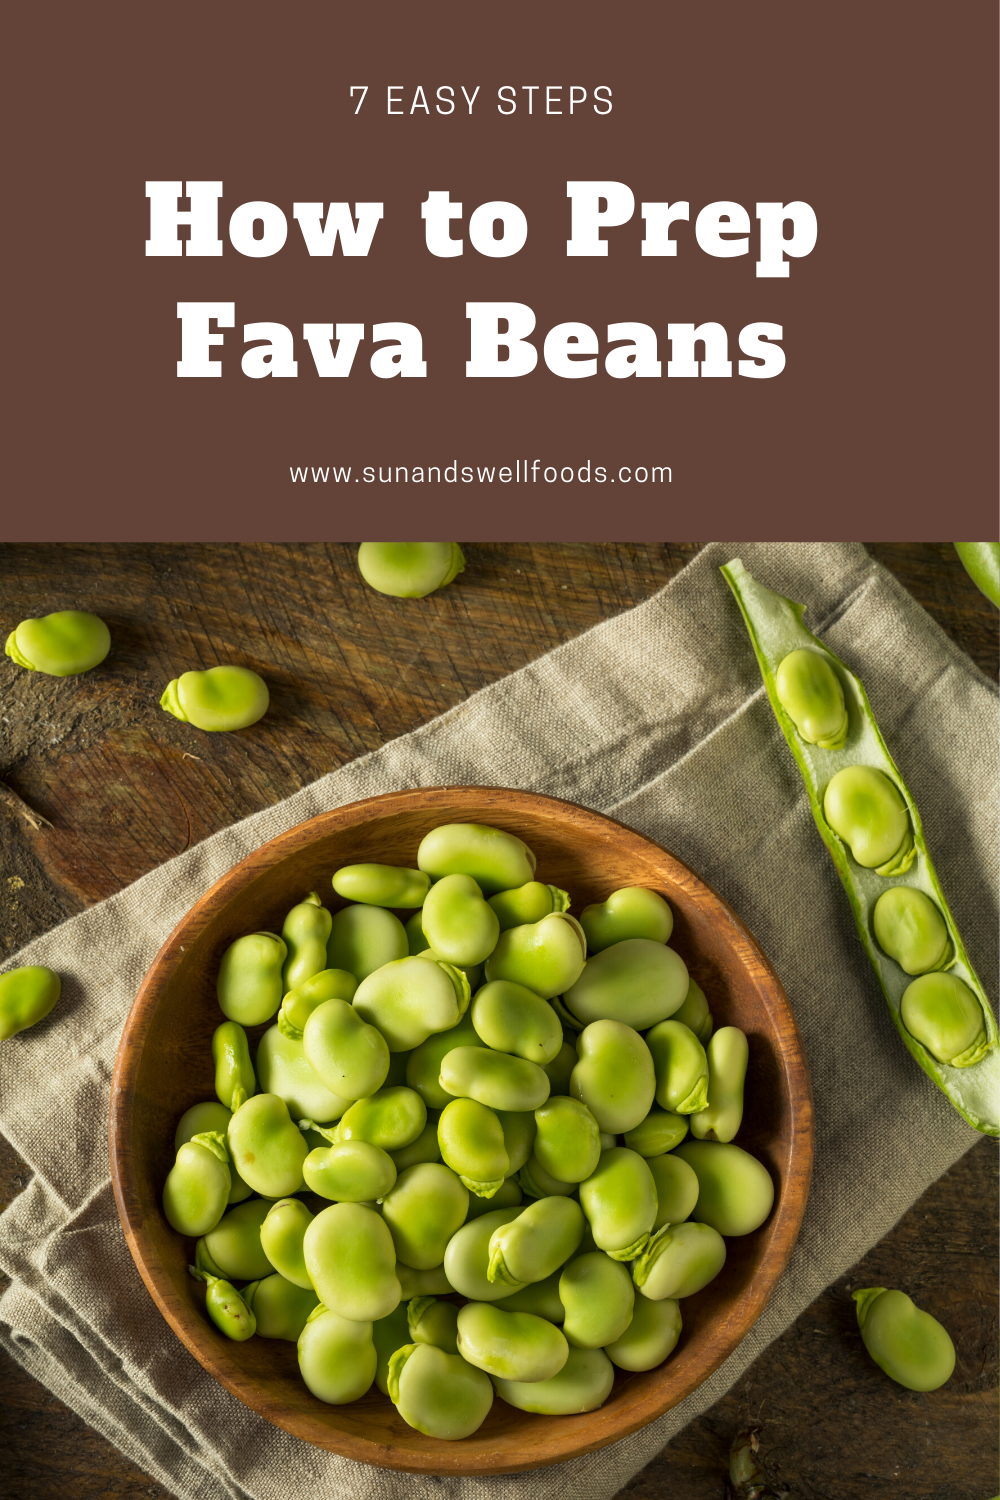 How to Prep Fava Beans